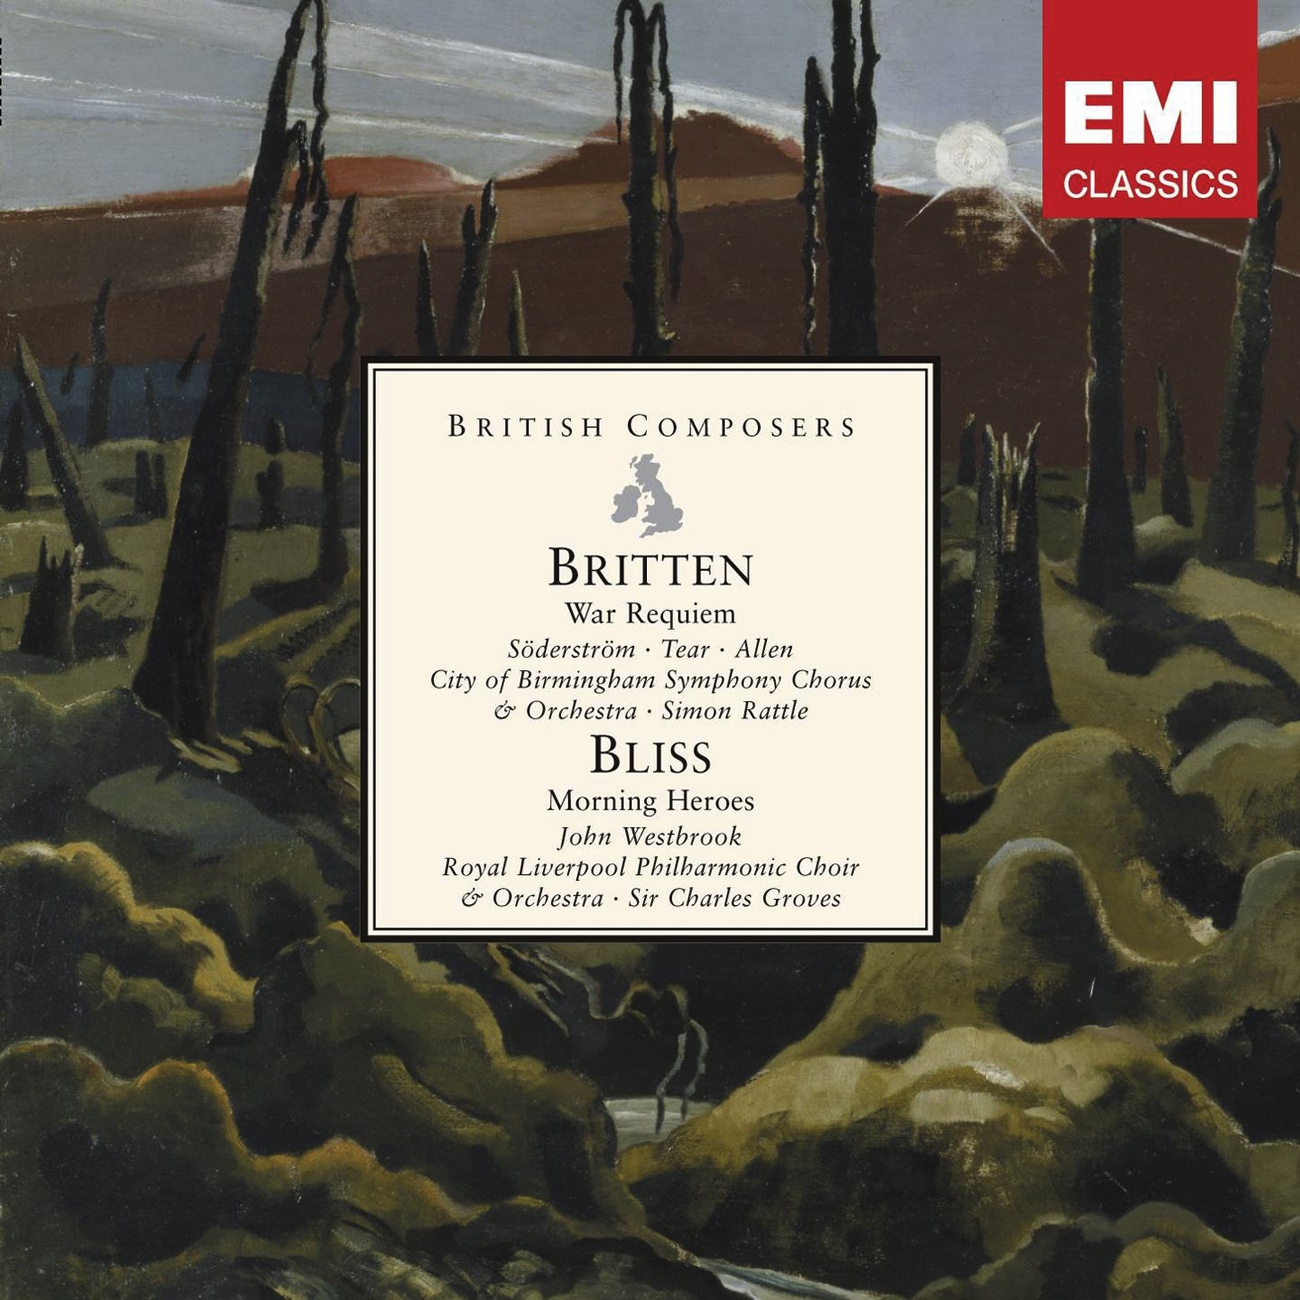 War Requiem, Op. 66: II. Dies irae, (b) Bugles sang (Baritone)